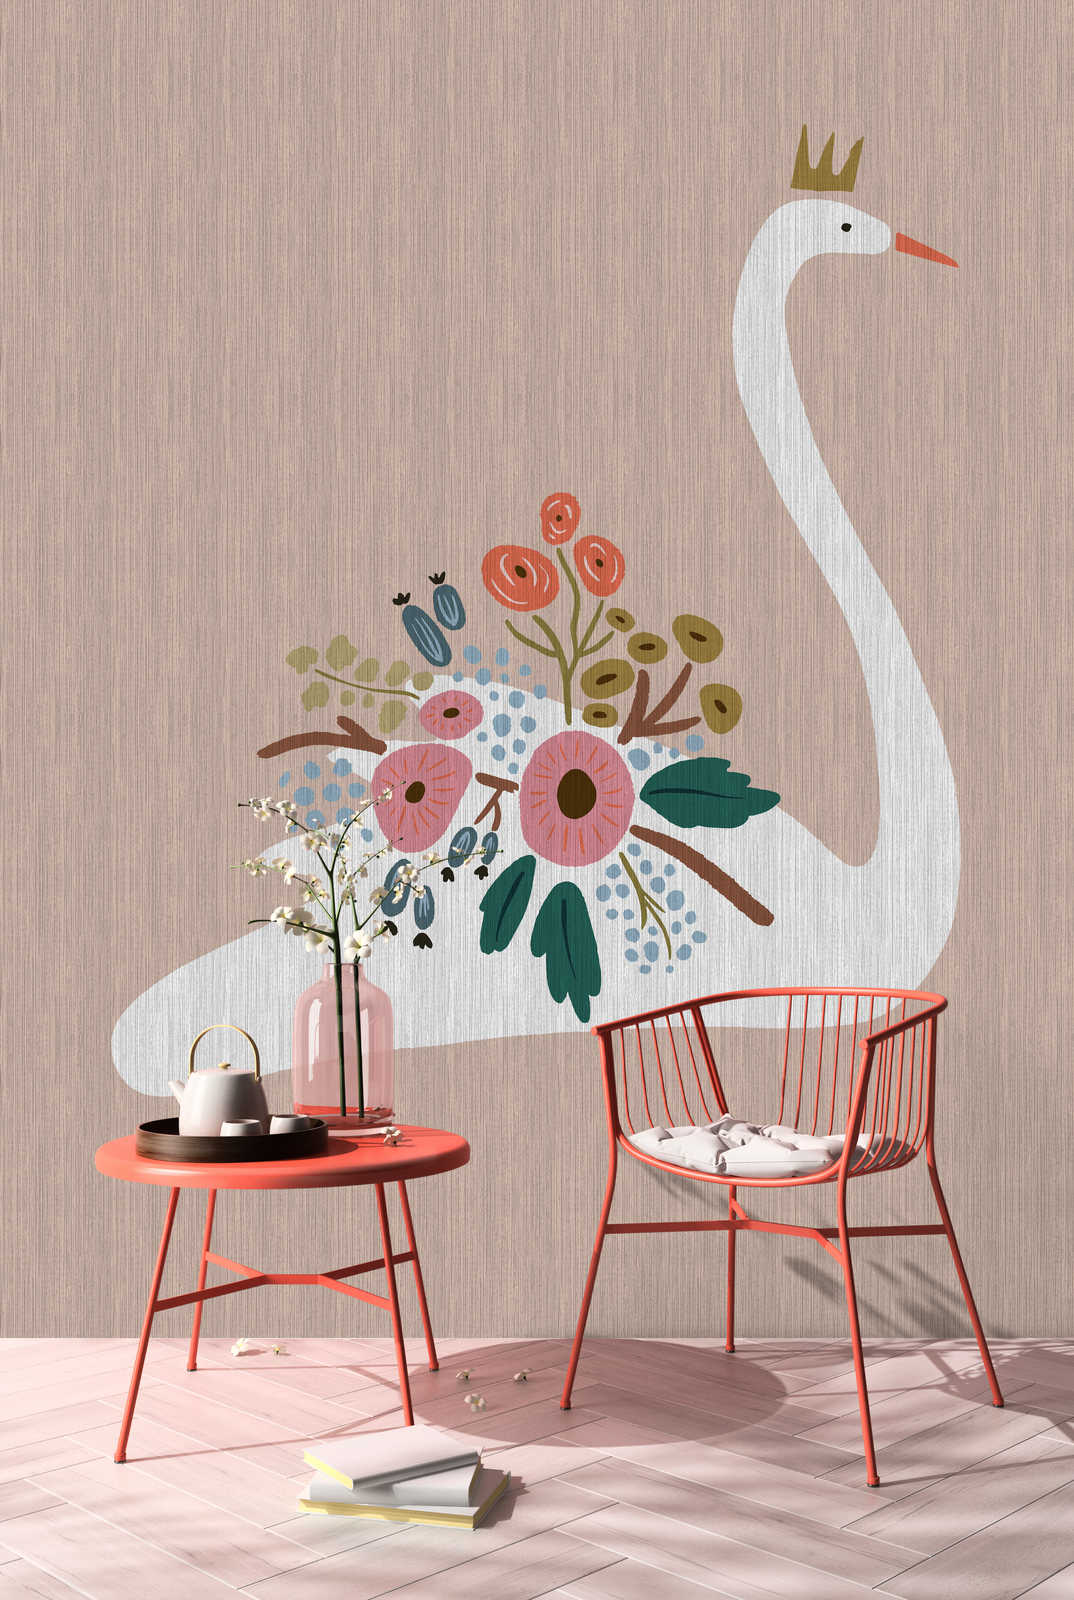             Up North 1 - papier peint design scandinave cygne & fleurs
        